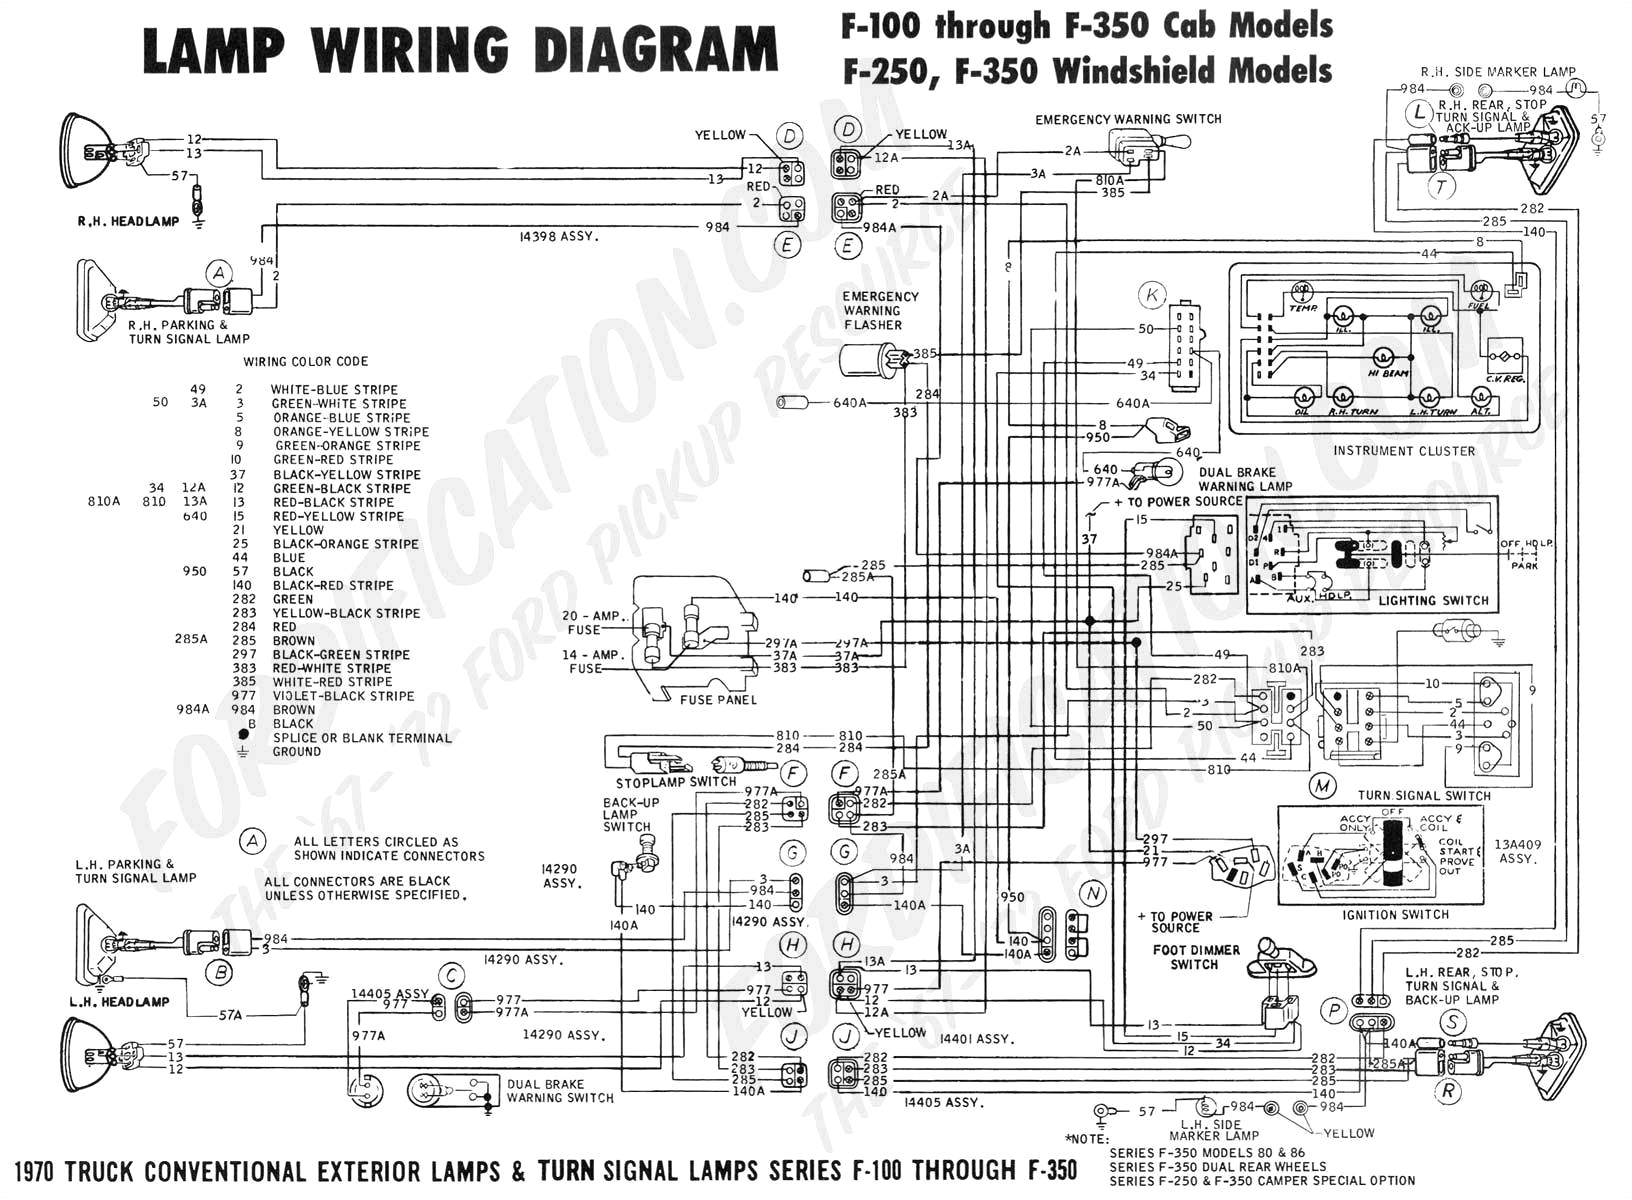 spartan wiring diagrams wiring diagram operations spartan motors wiring diagram wiring diagrams structure spartan wiring diagrams